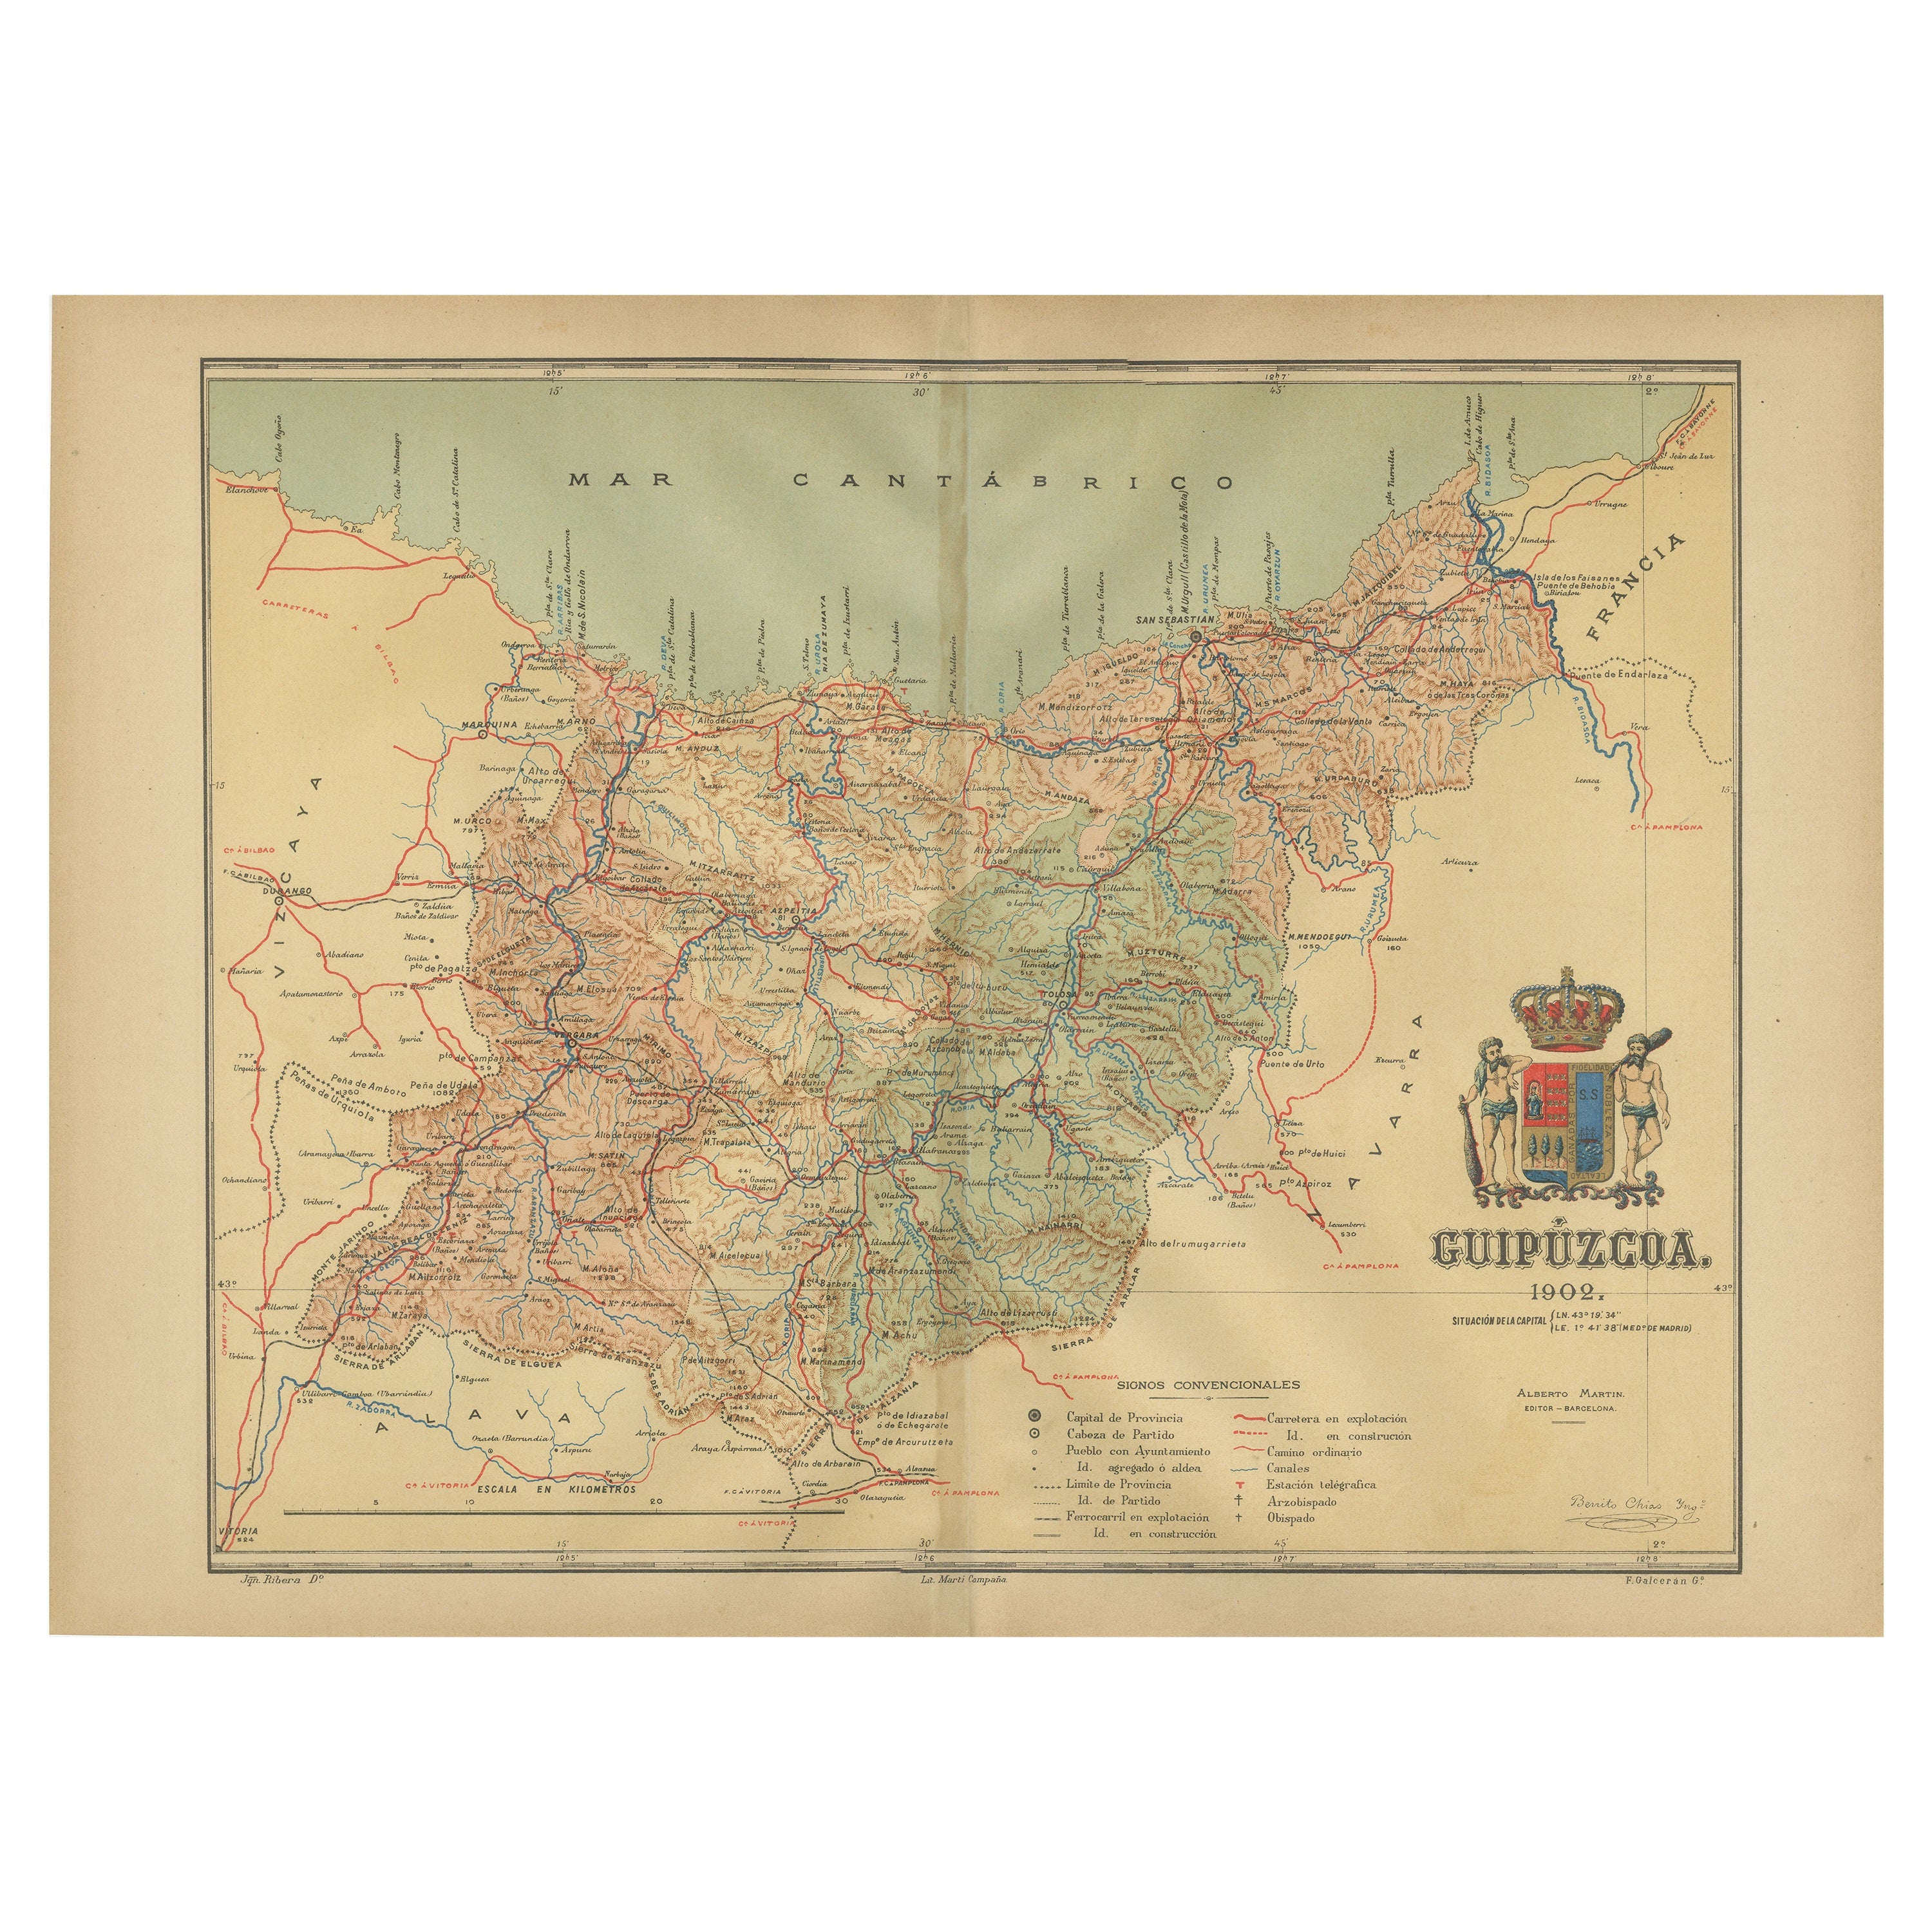 Gipuzkoa 1902: A Cartographic Snapshot of the Basque Coastline and Highlands For Sale